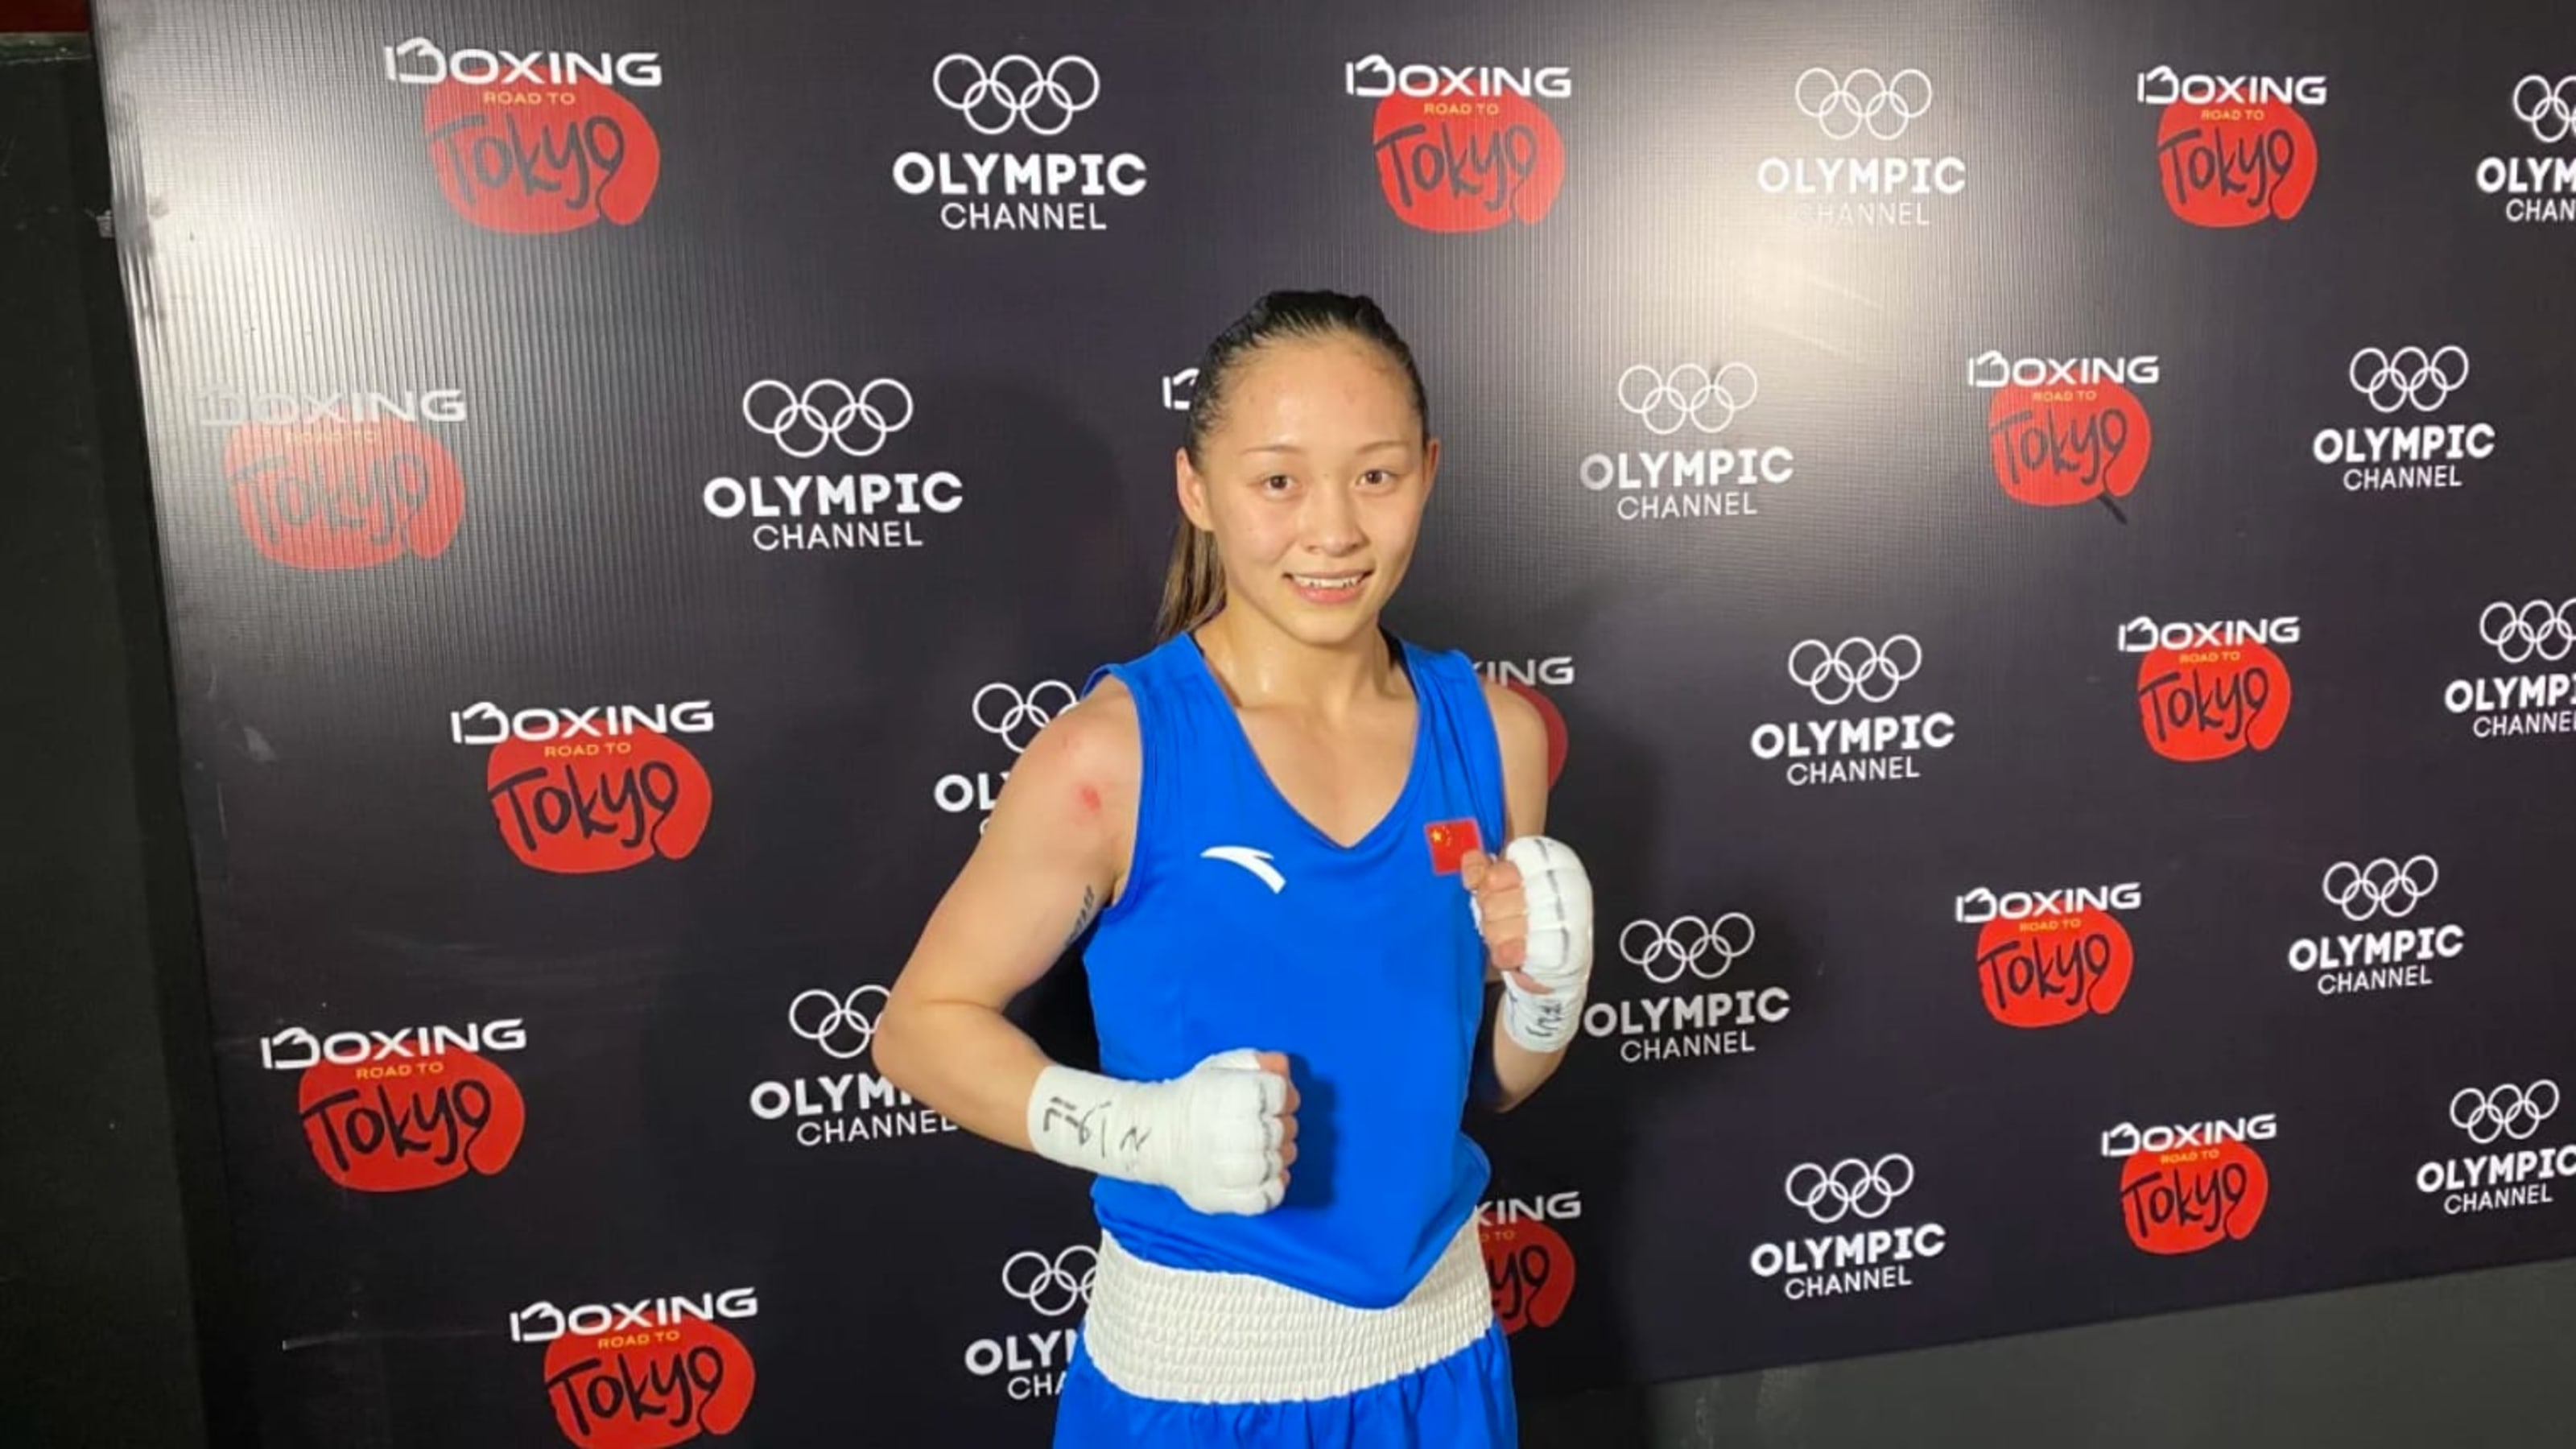 Boxer CHANG Yuan Aiming high for Tokyo